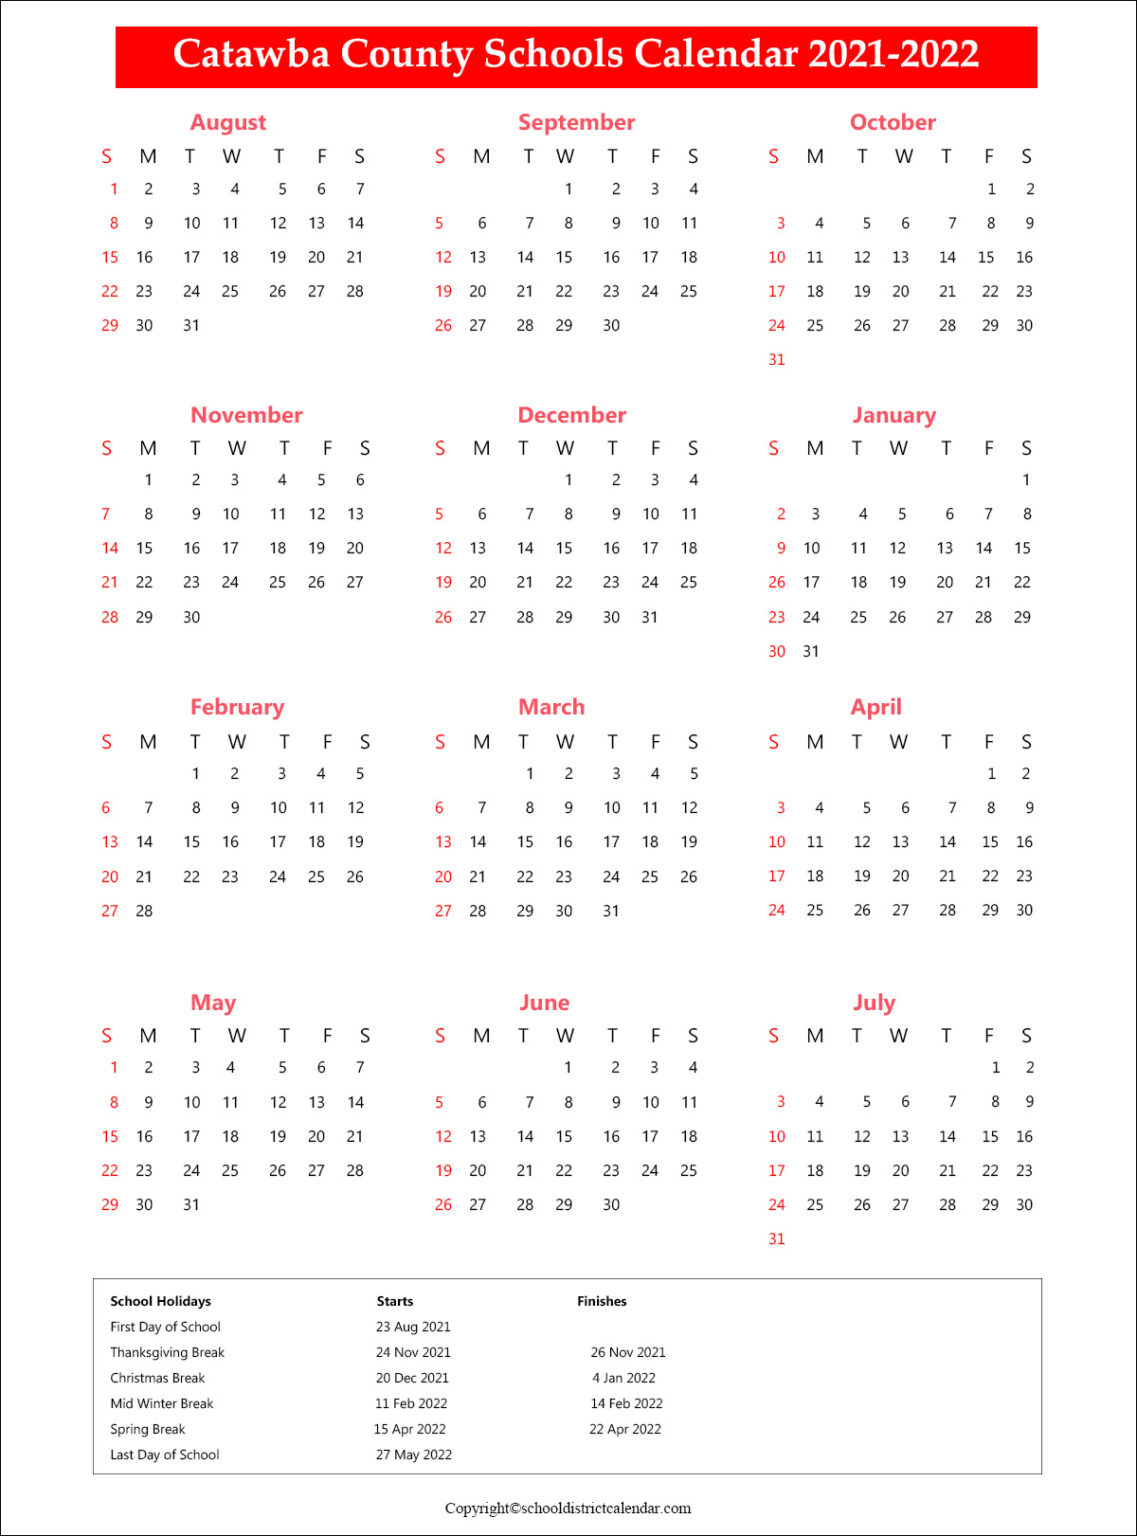 Catawba County Schools District Calendar Holidays 20212022